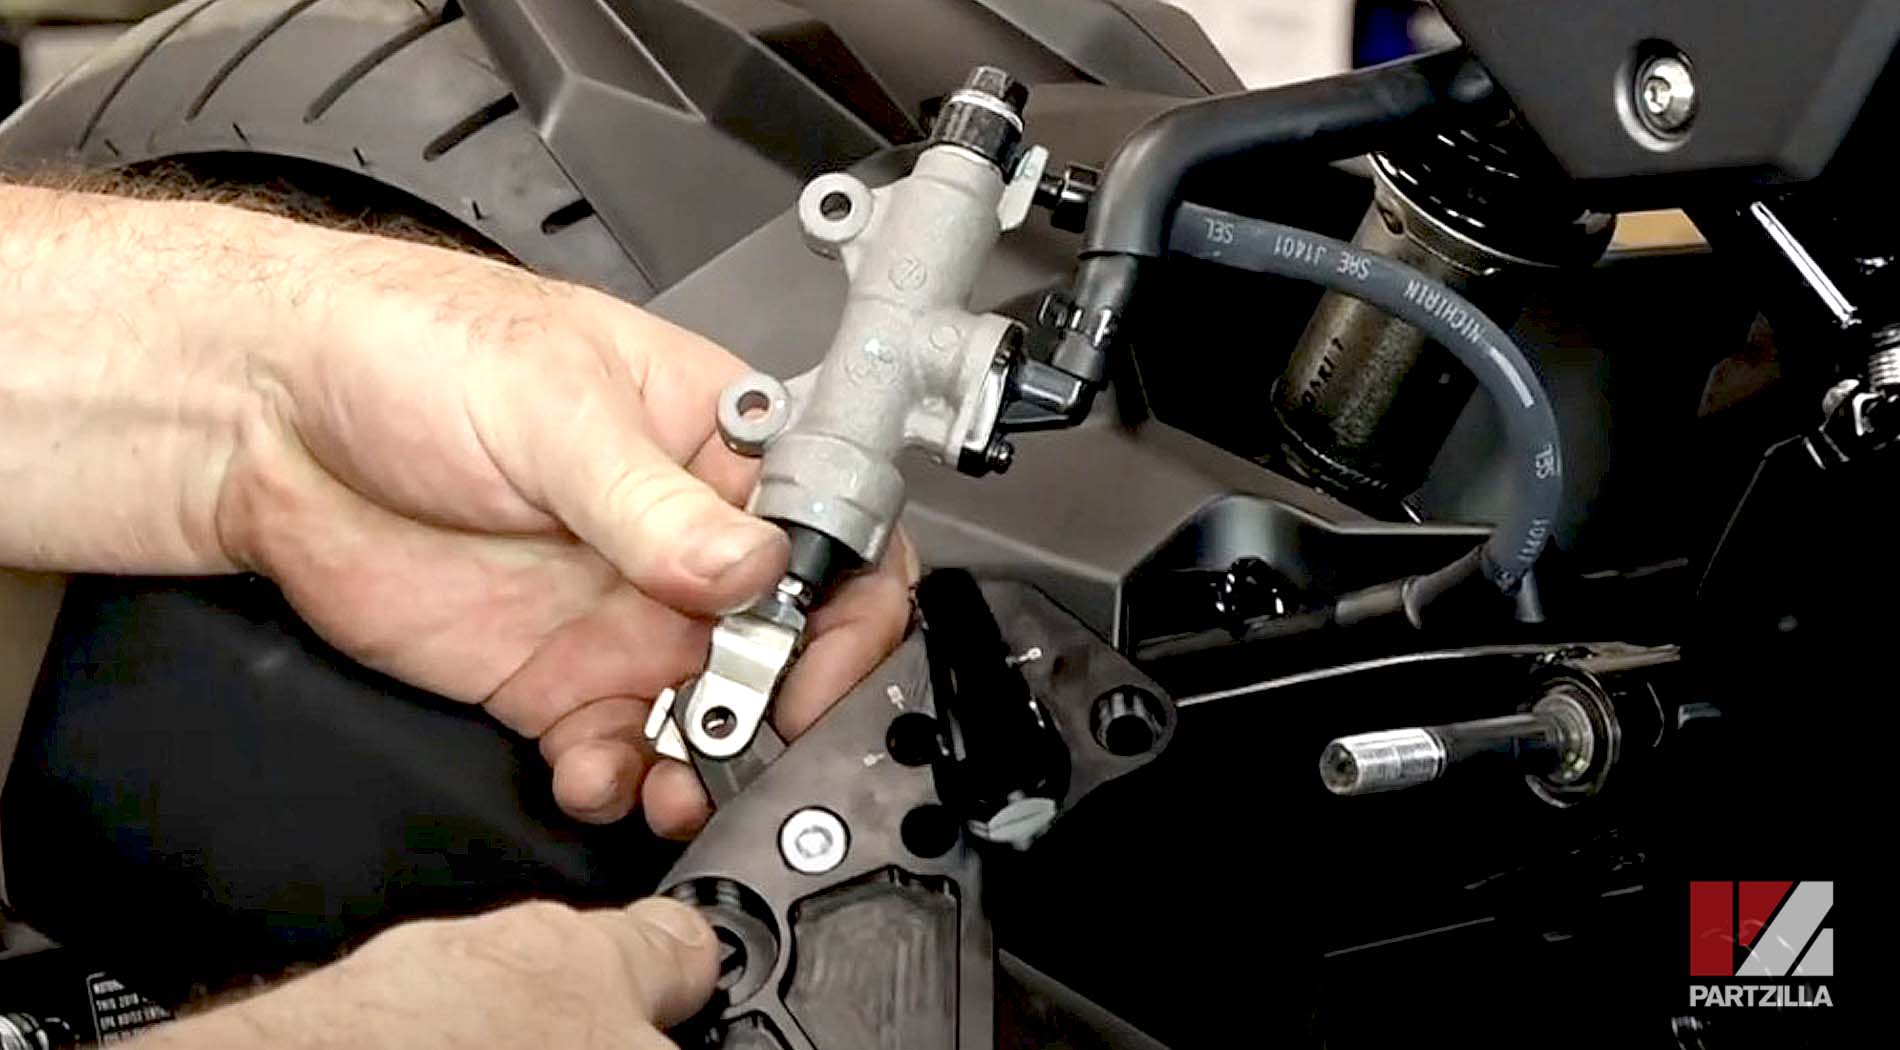 2018 Honda Grom ABS 125 rearset aftermarket upgrade brake pedal installation